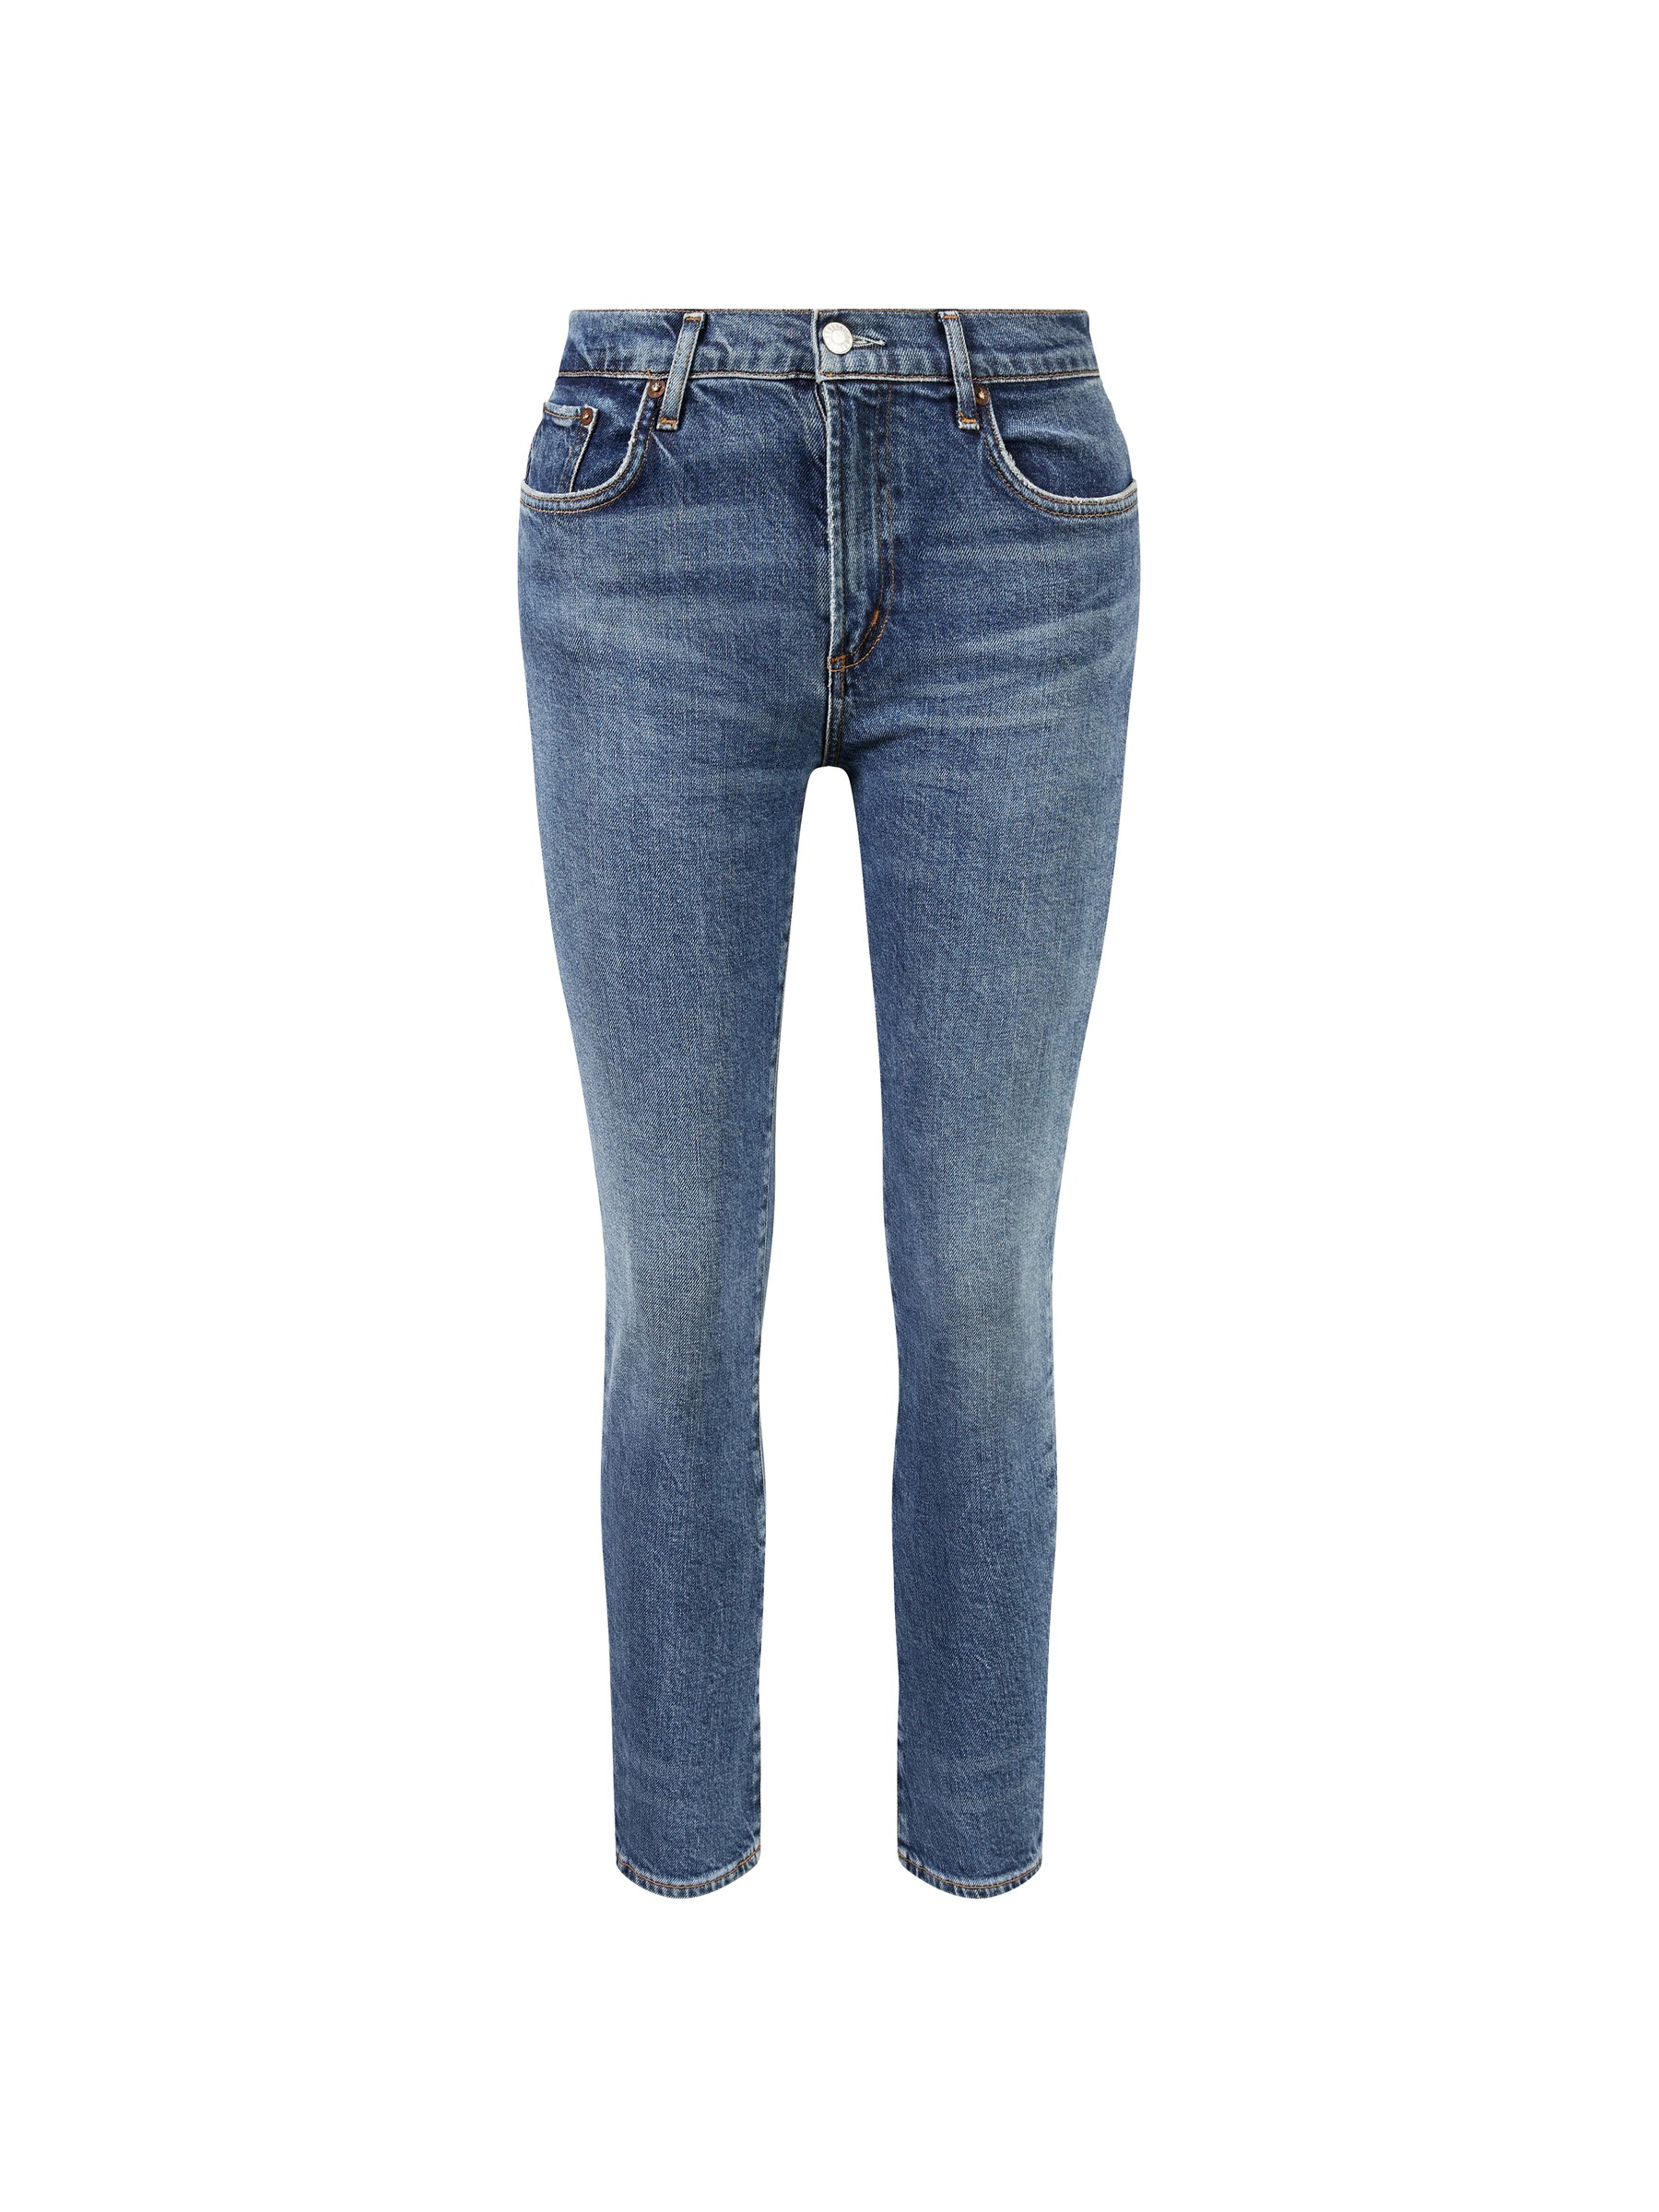 Damen Bekleidung Jeans Röhrenjeans Agolde Denim Skinny-Fit Jeans Toni Blau in Blau 